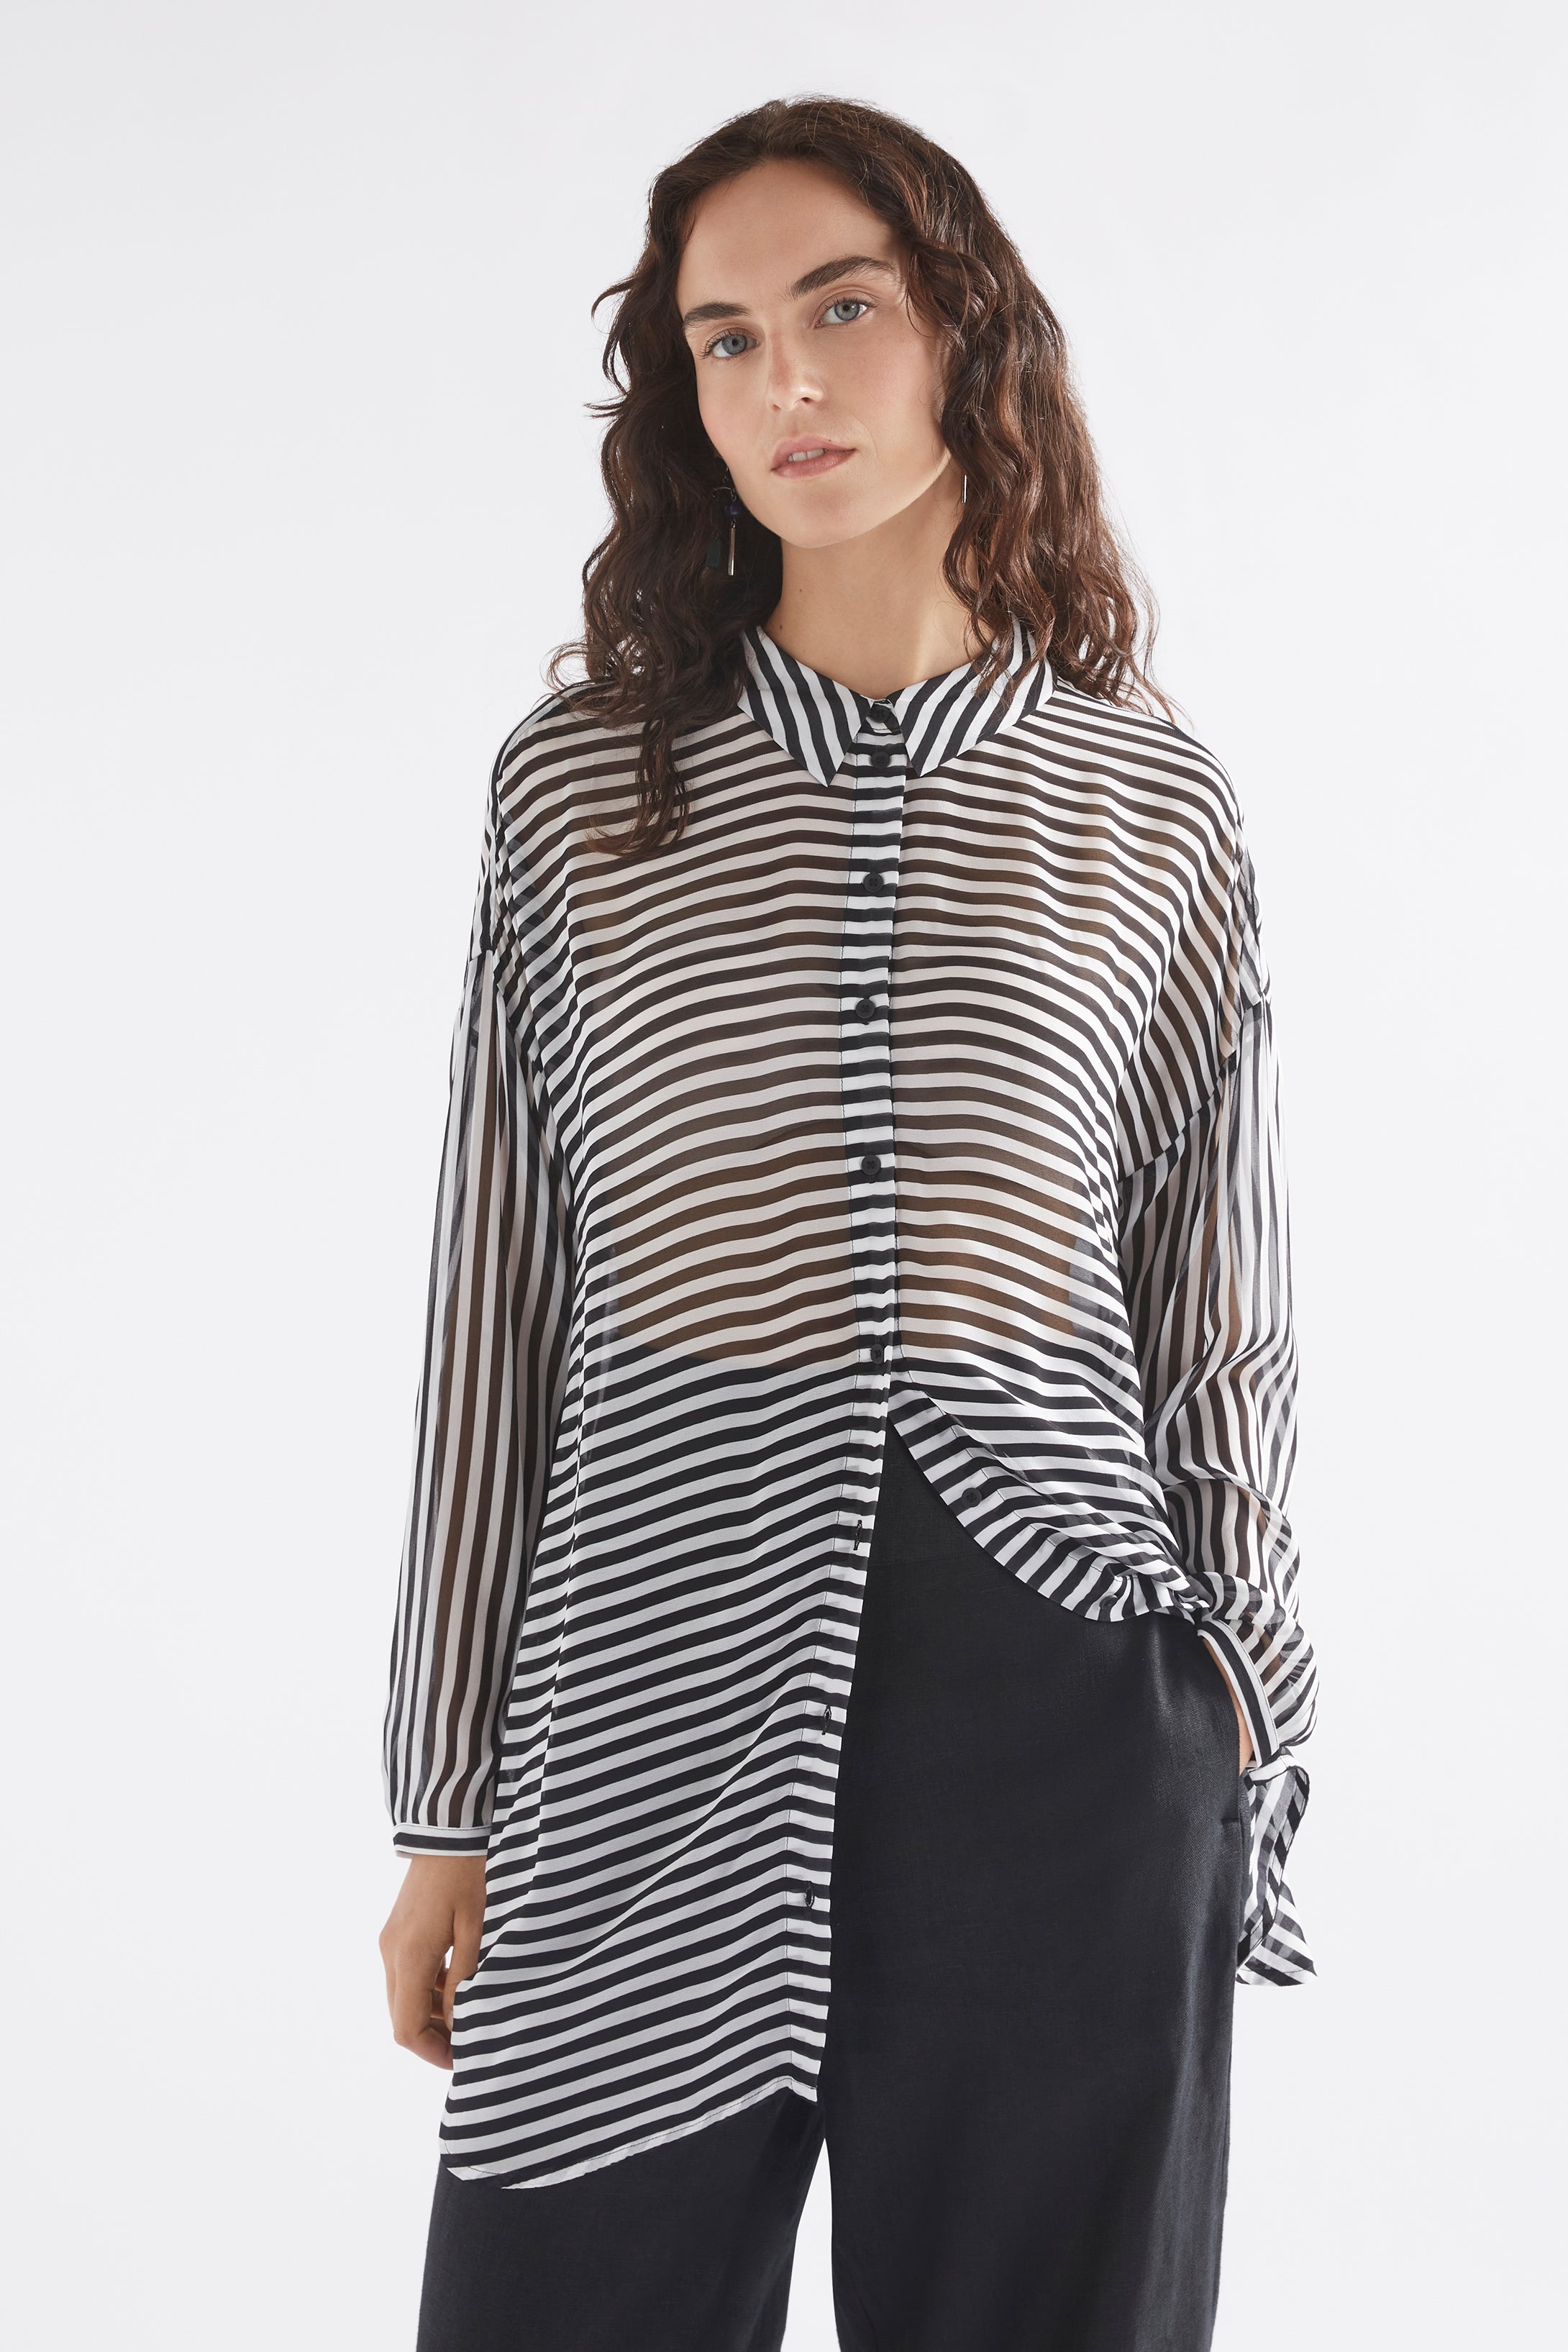 Eir Sheer Shirt - Black/White Stripe